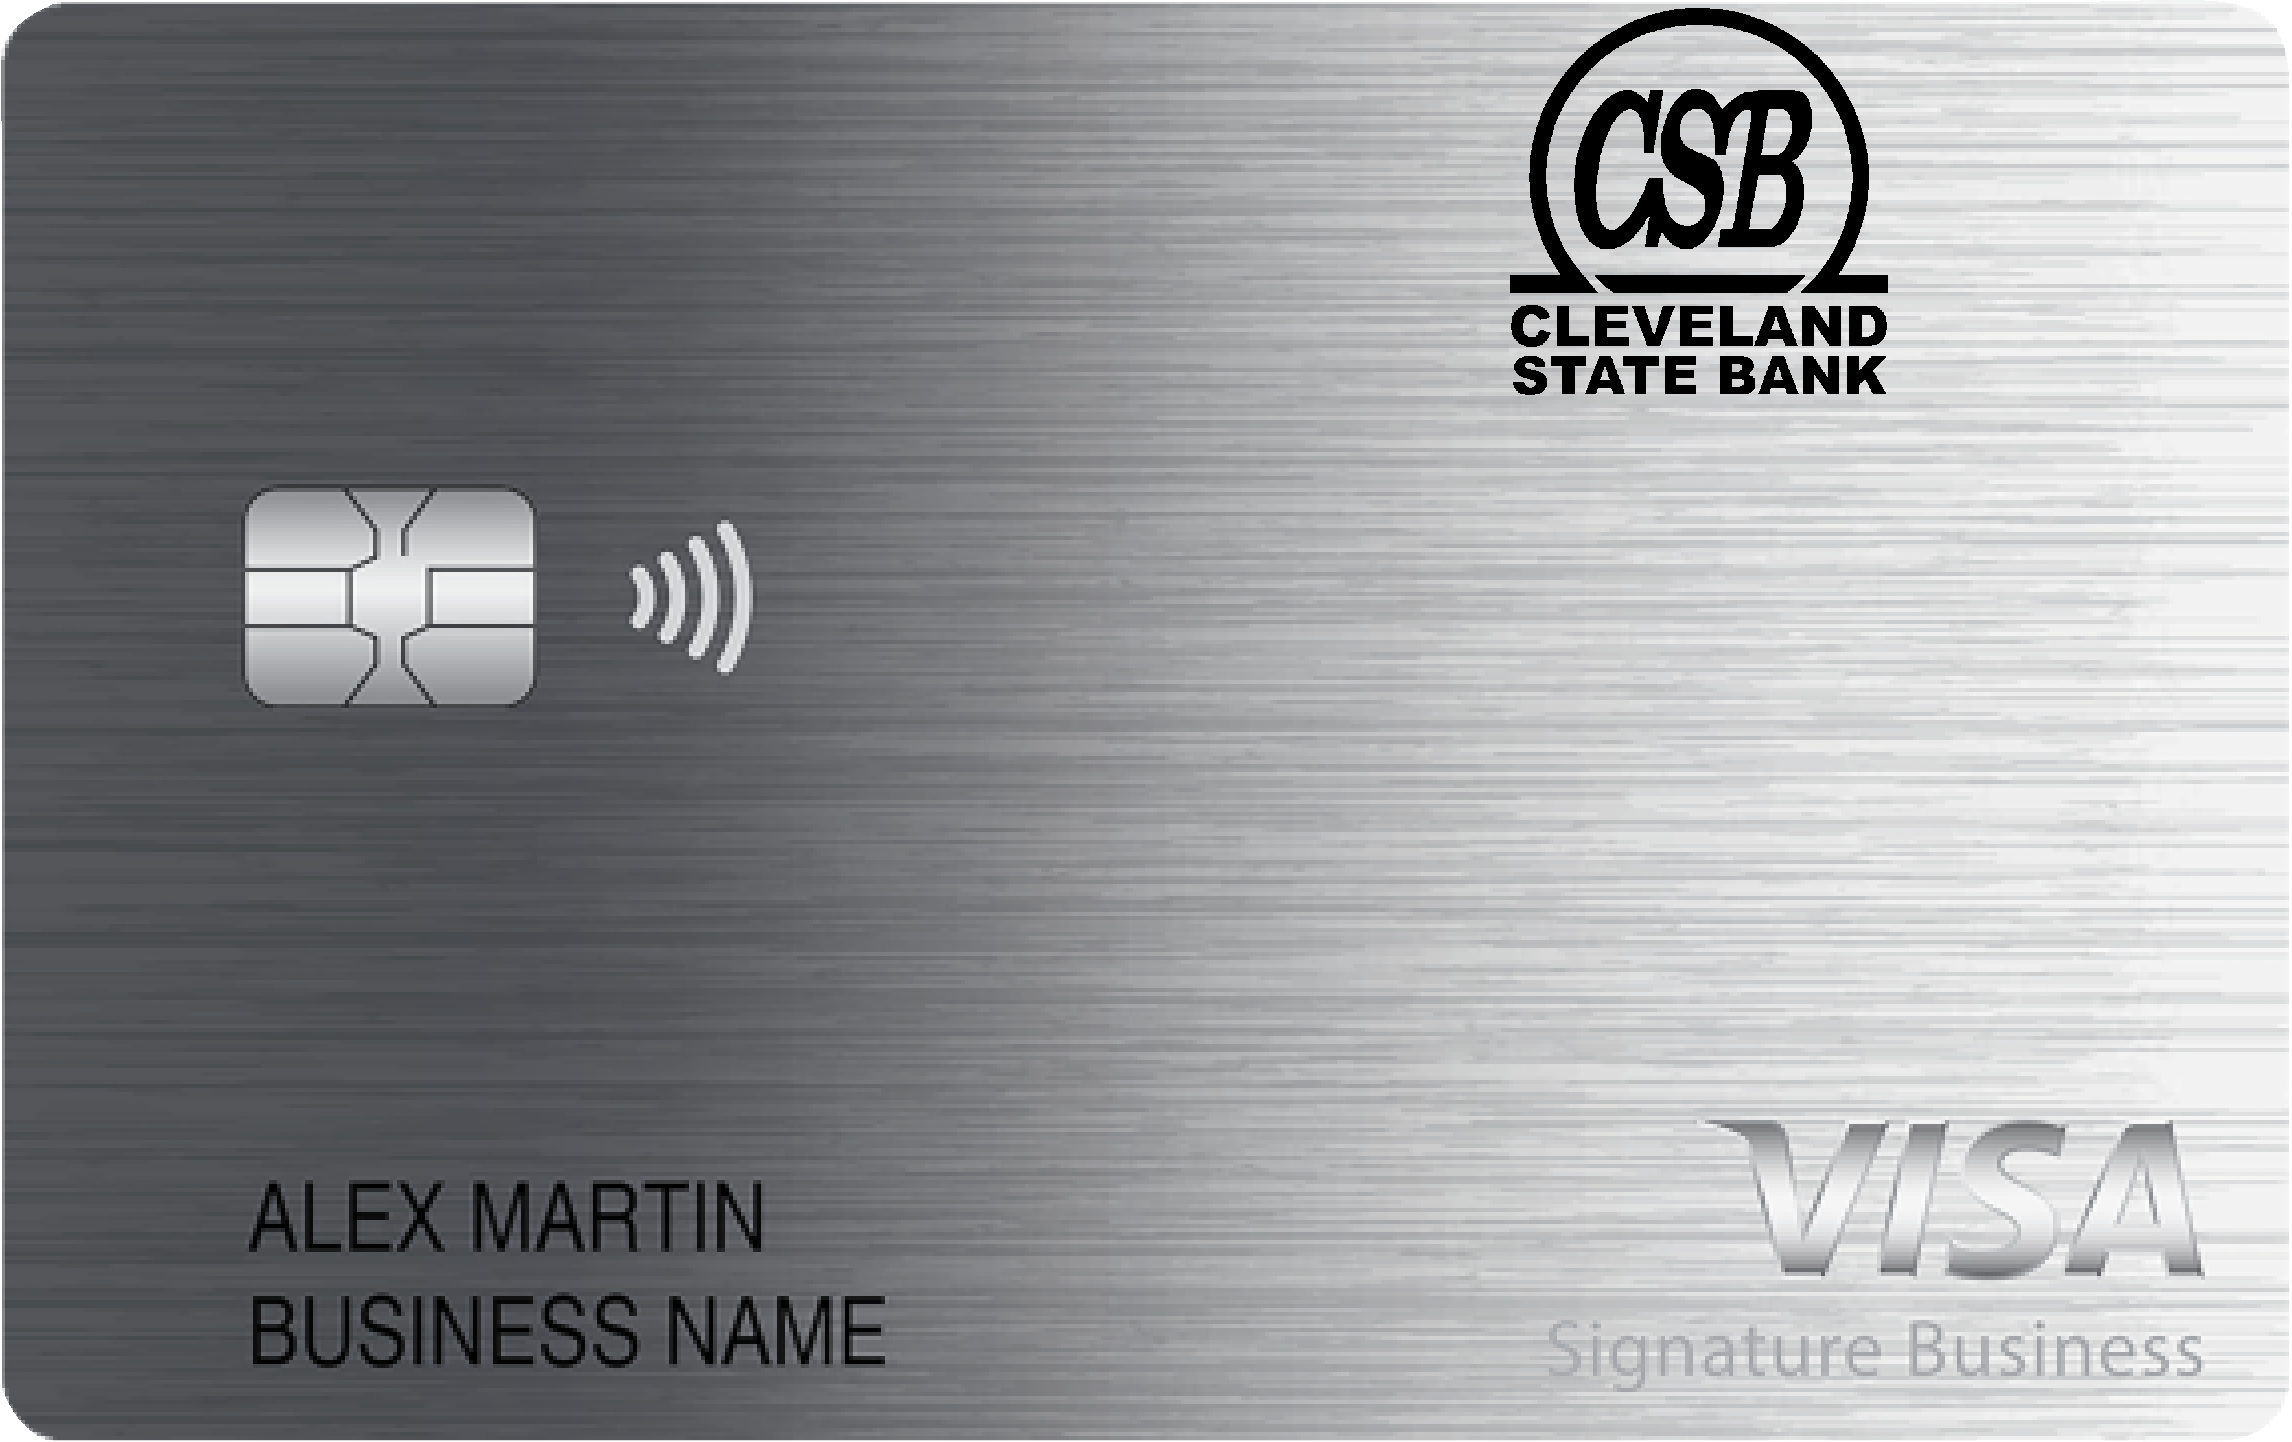 Cleveland State Bank Smart Business Rewards Card